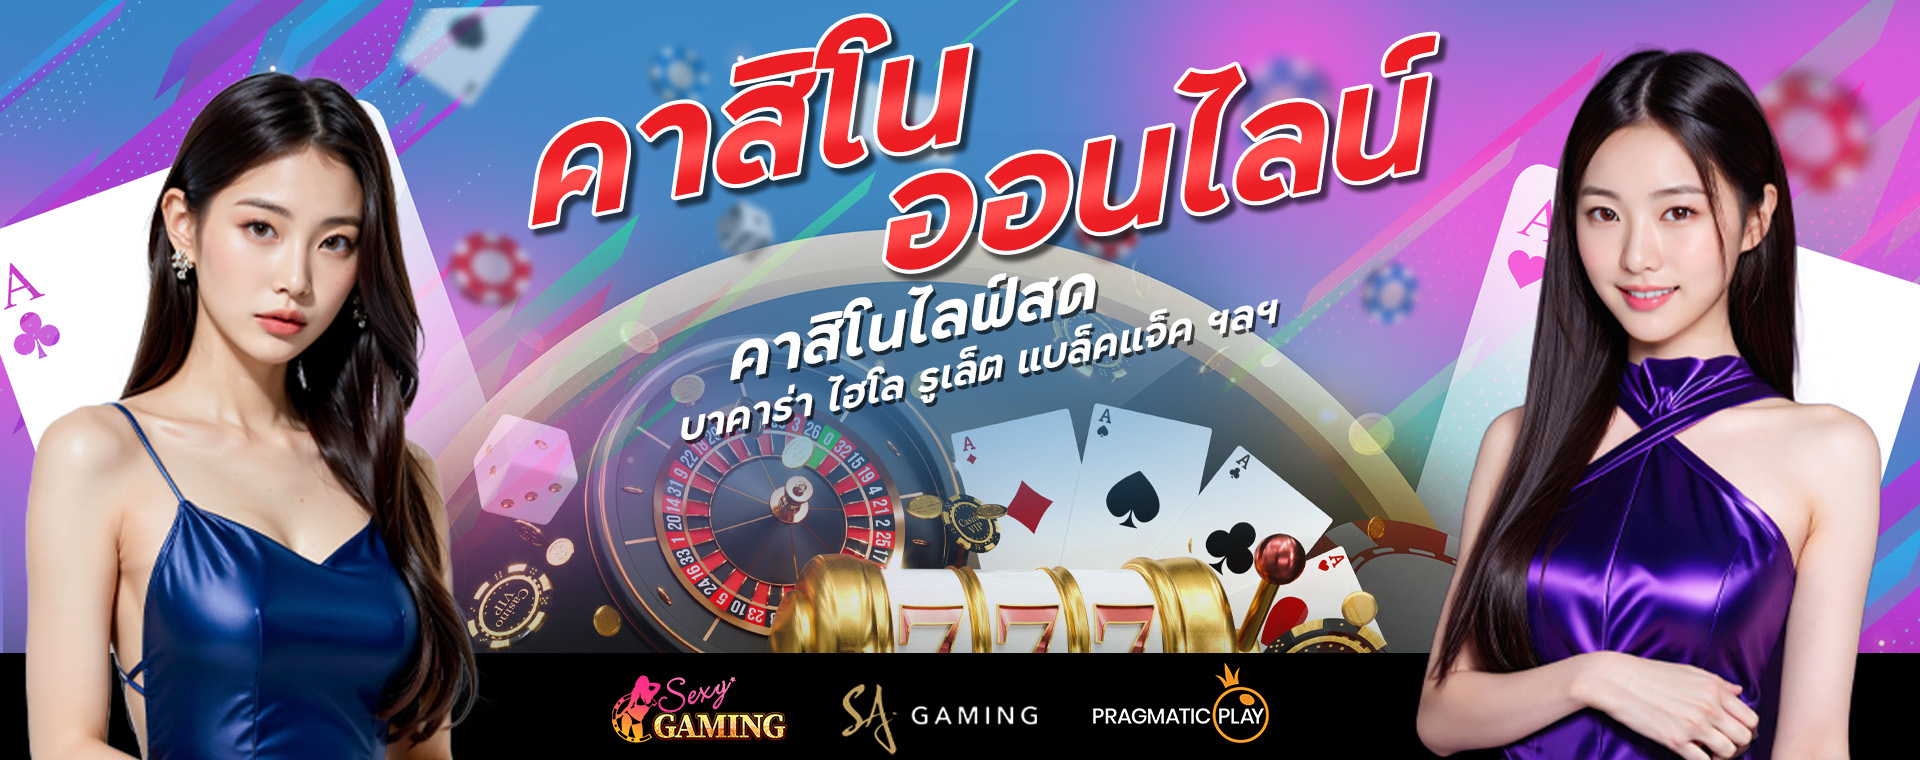 banner casino online 1920x761